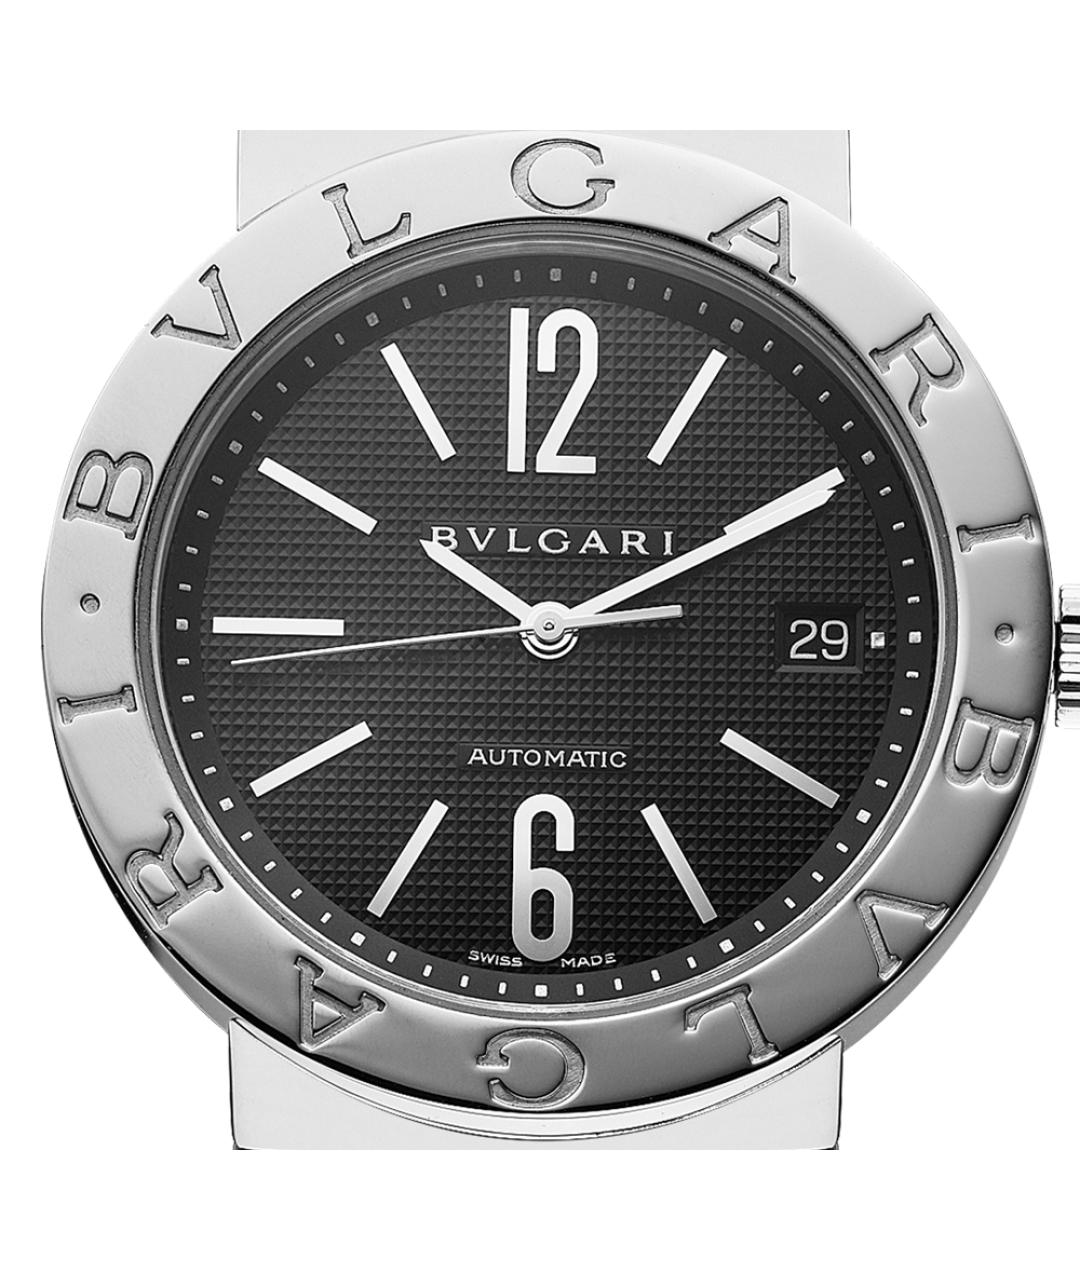 BVLGARI Часы, фото 2